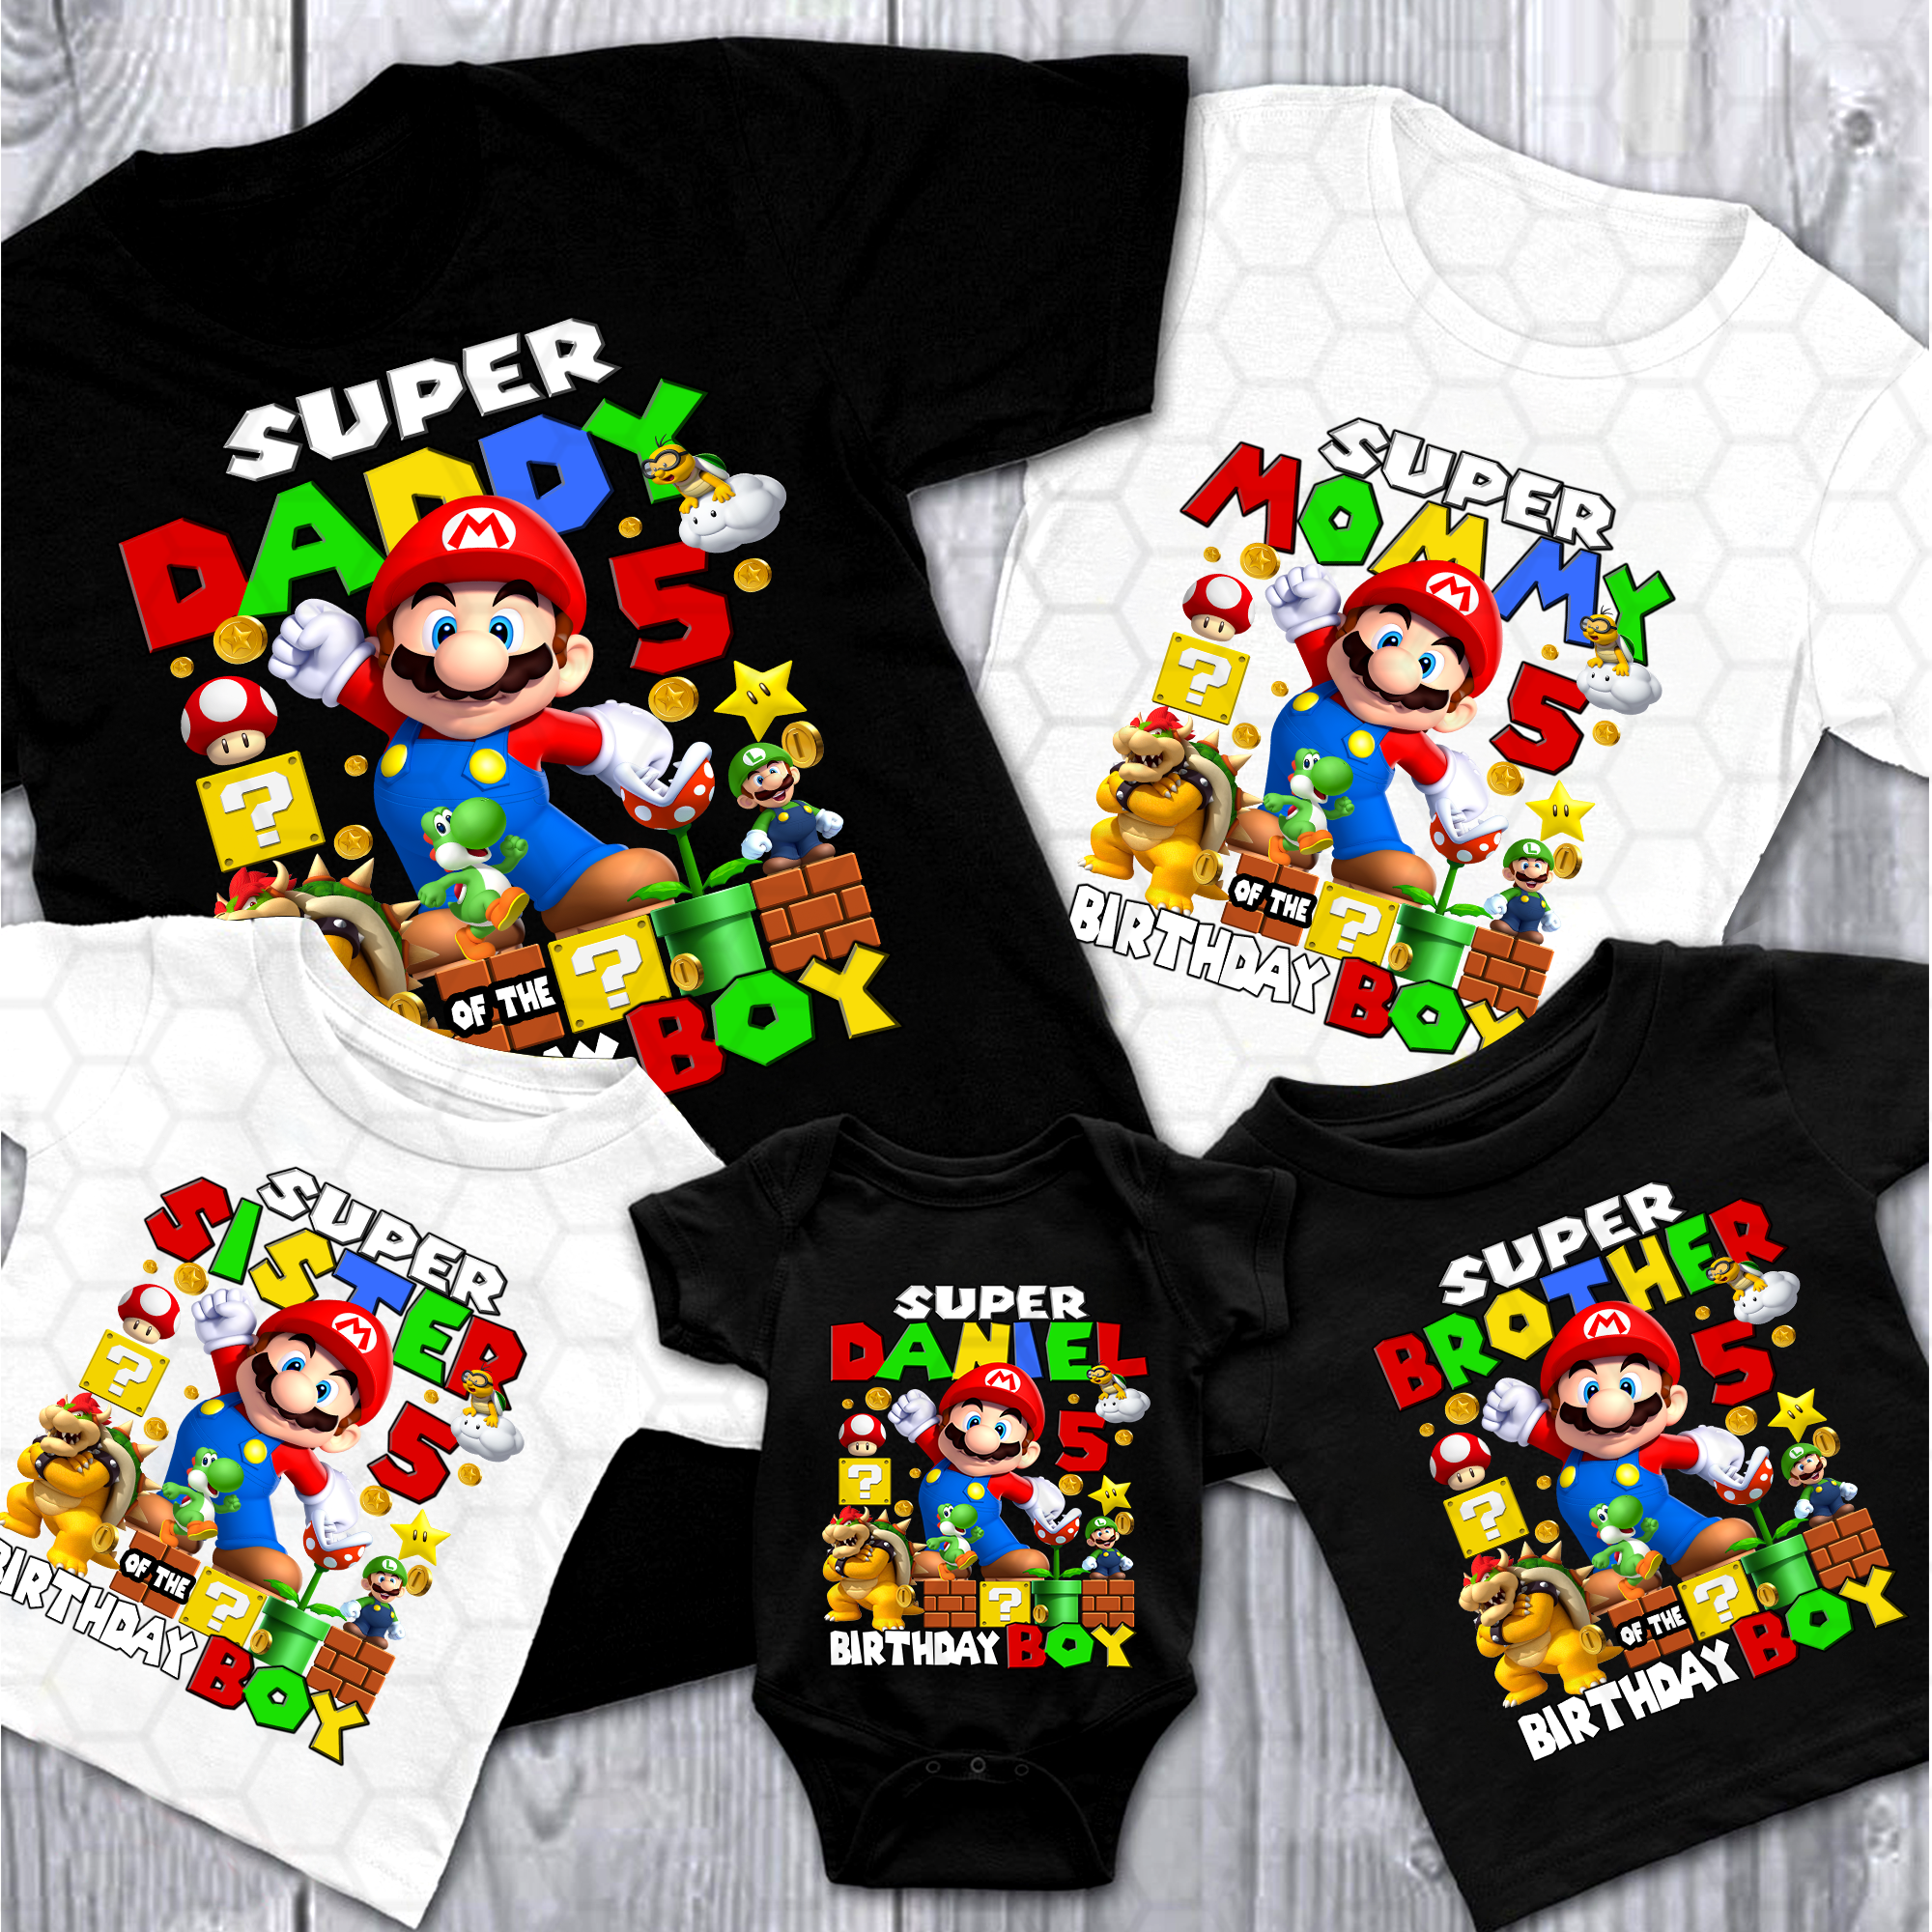 Personalized Super Mario birthday shirt set, Super Mario family shirts, Super Mario theme party shirts, Super Mario matching shirts, Super Mario tshirt